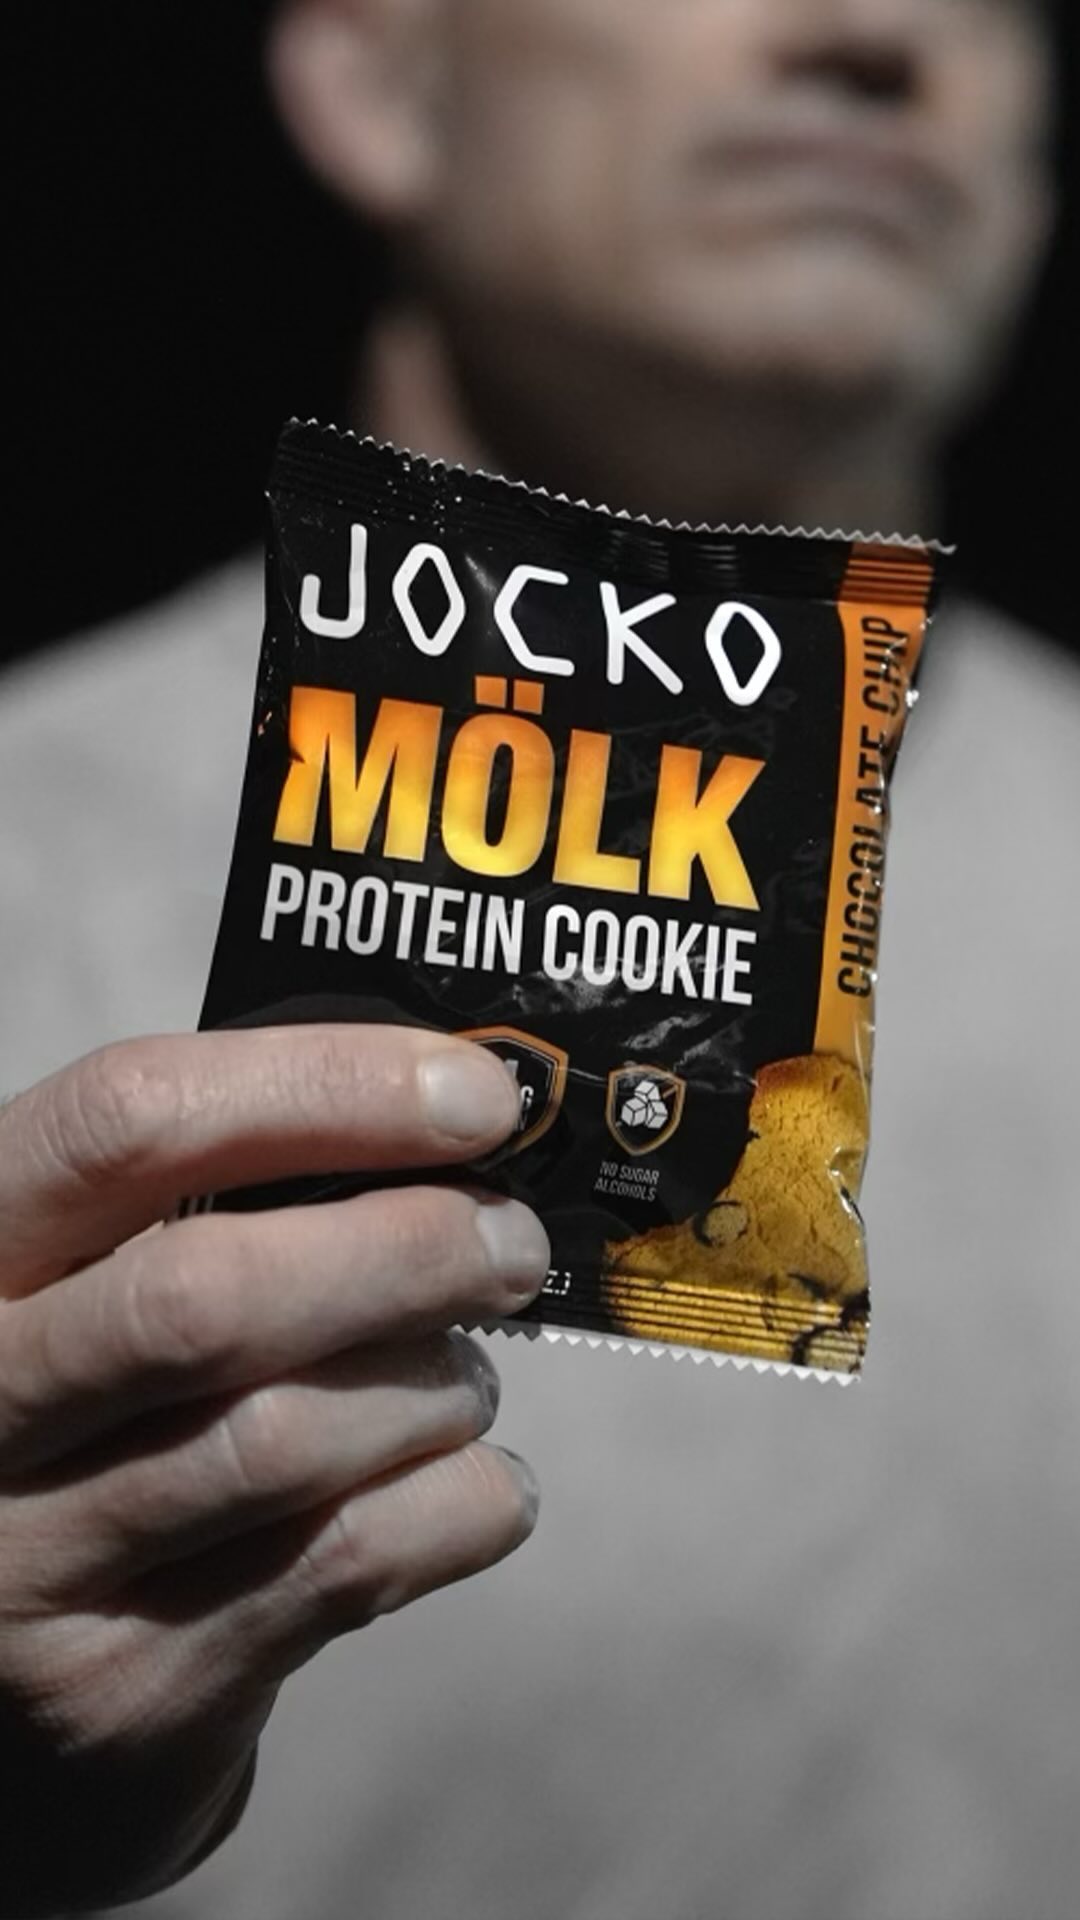 Jocko MOLK Protein Cookie